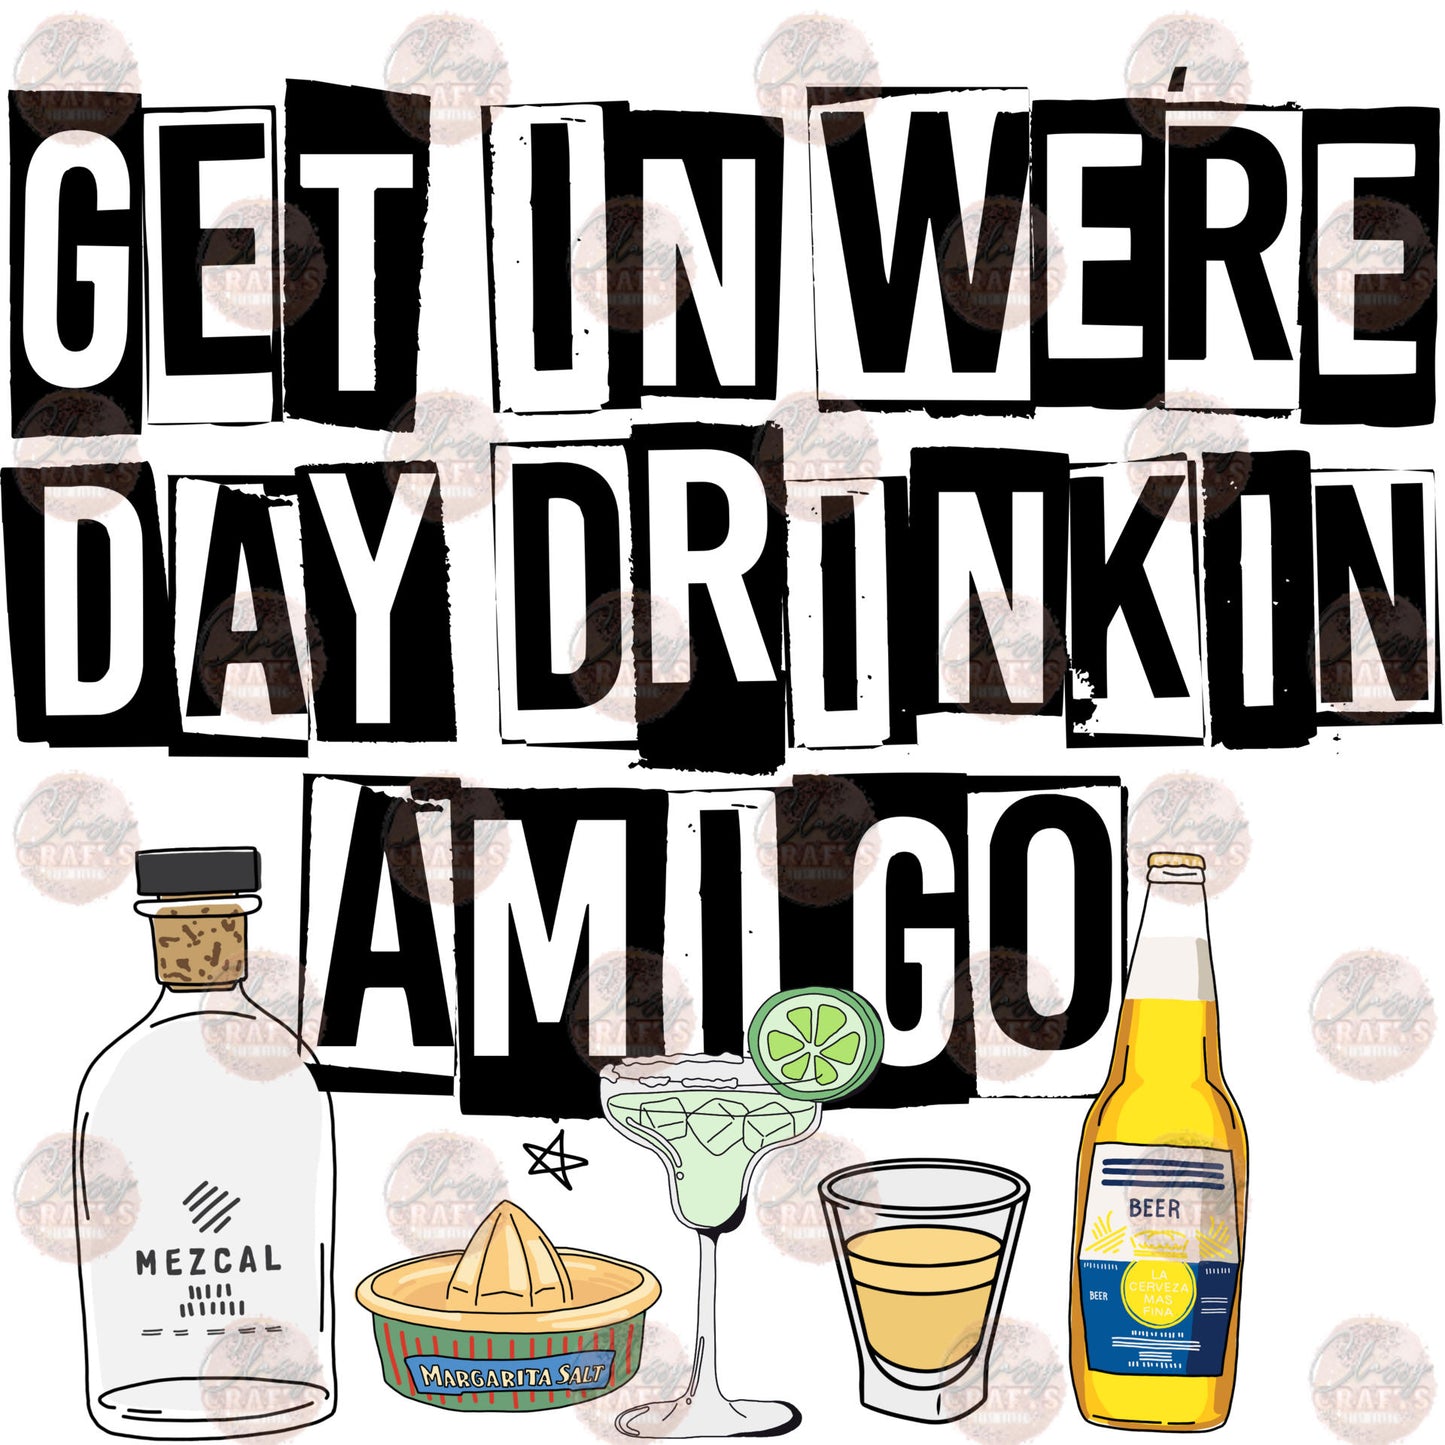 Get In We're Day Drinkin Amigo 2 - Sublimation Transfer